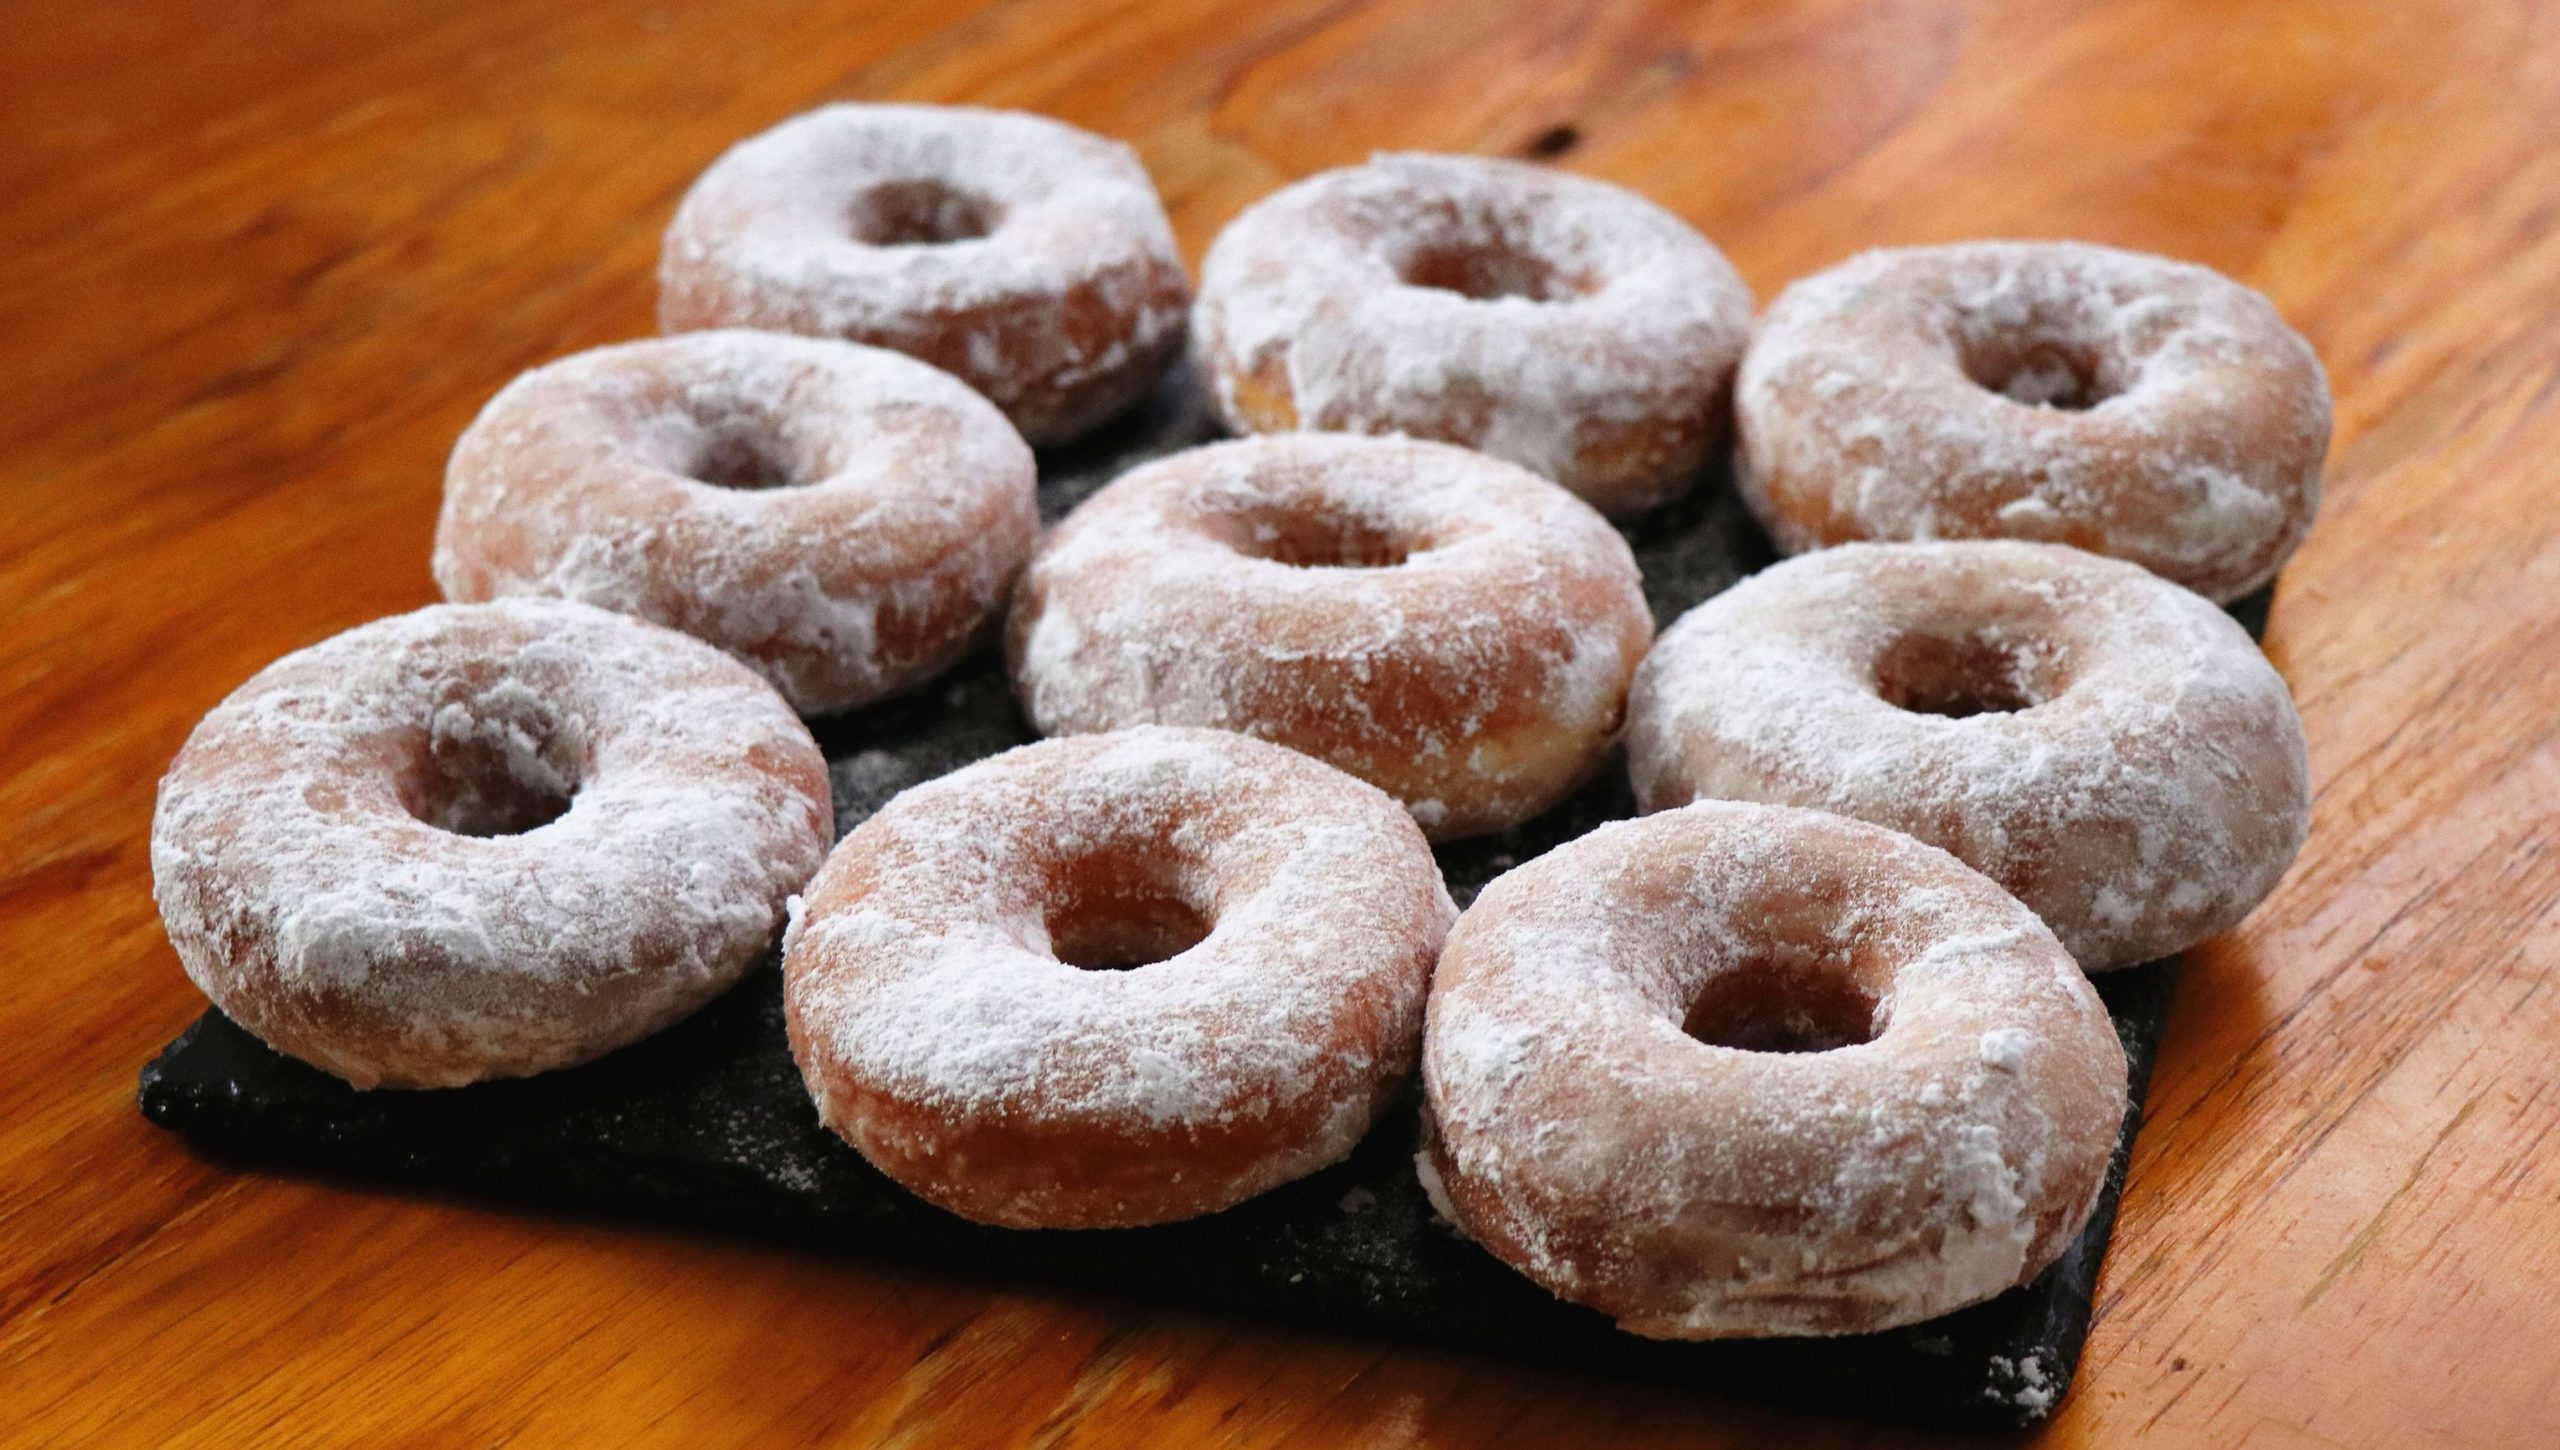 Simple Sugar Donuts